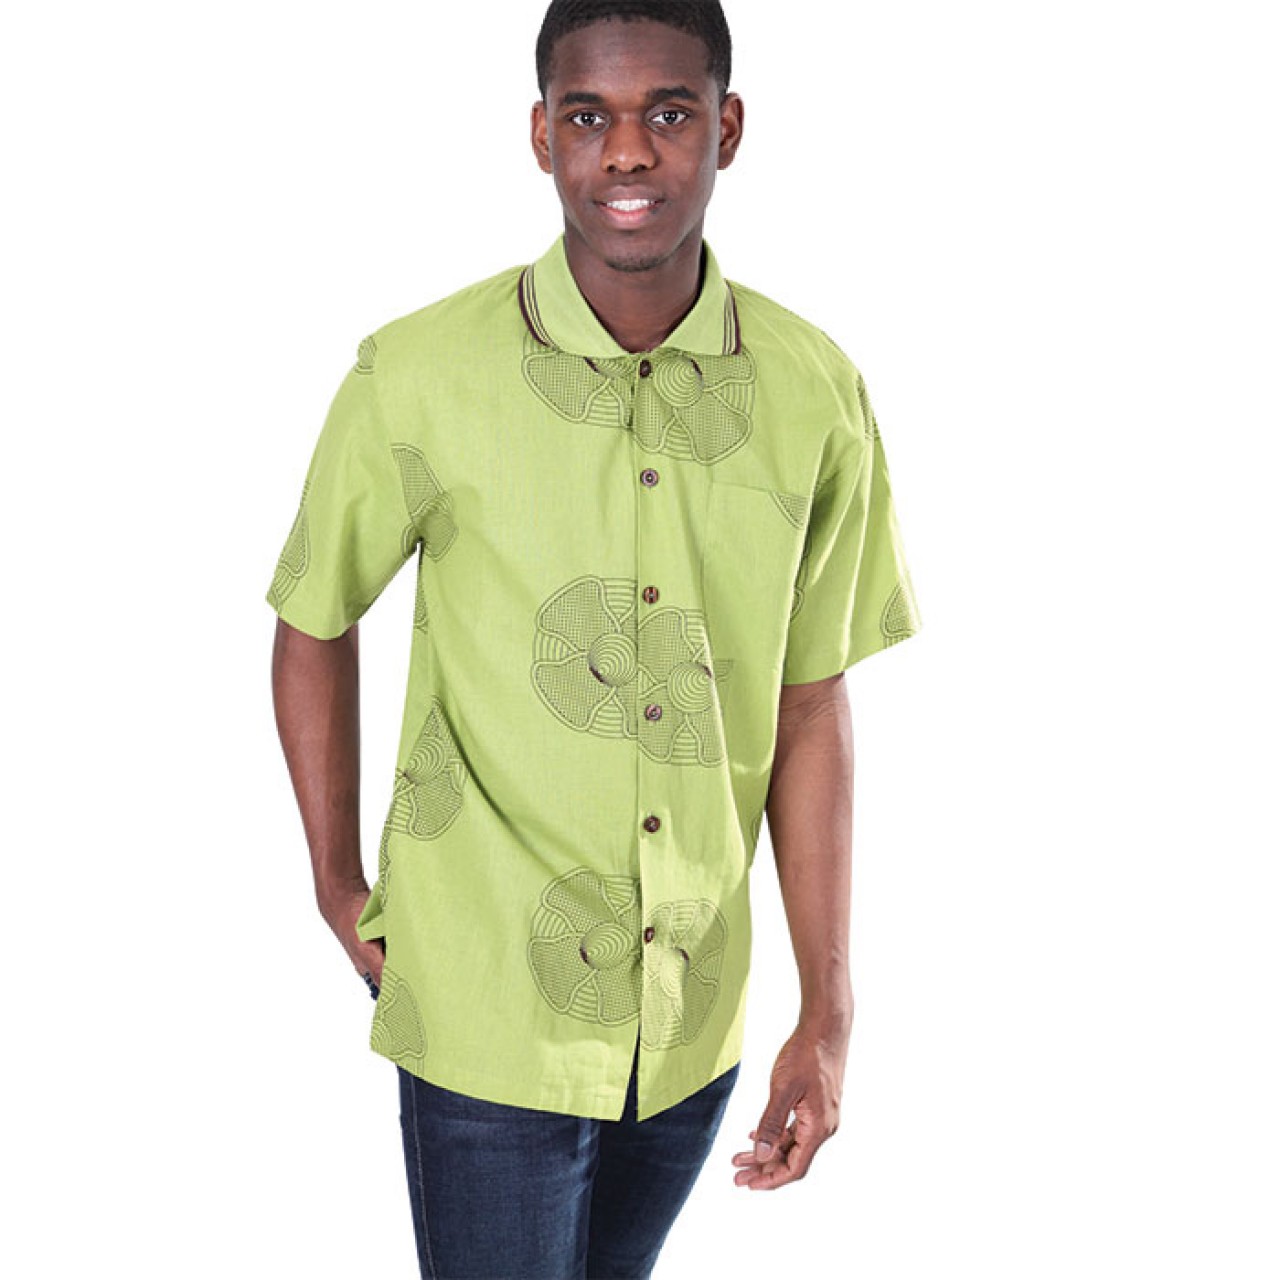 Stylish Short Sleeve Green Shirt With Collar For Men